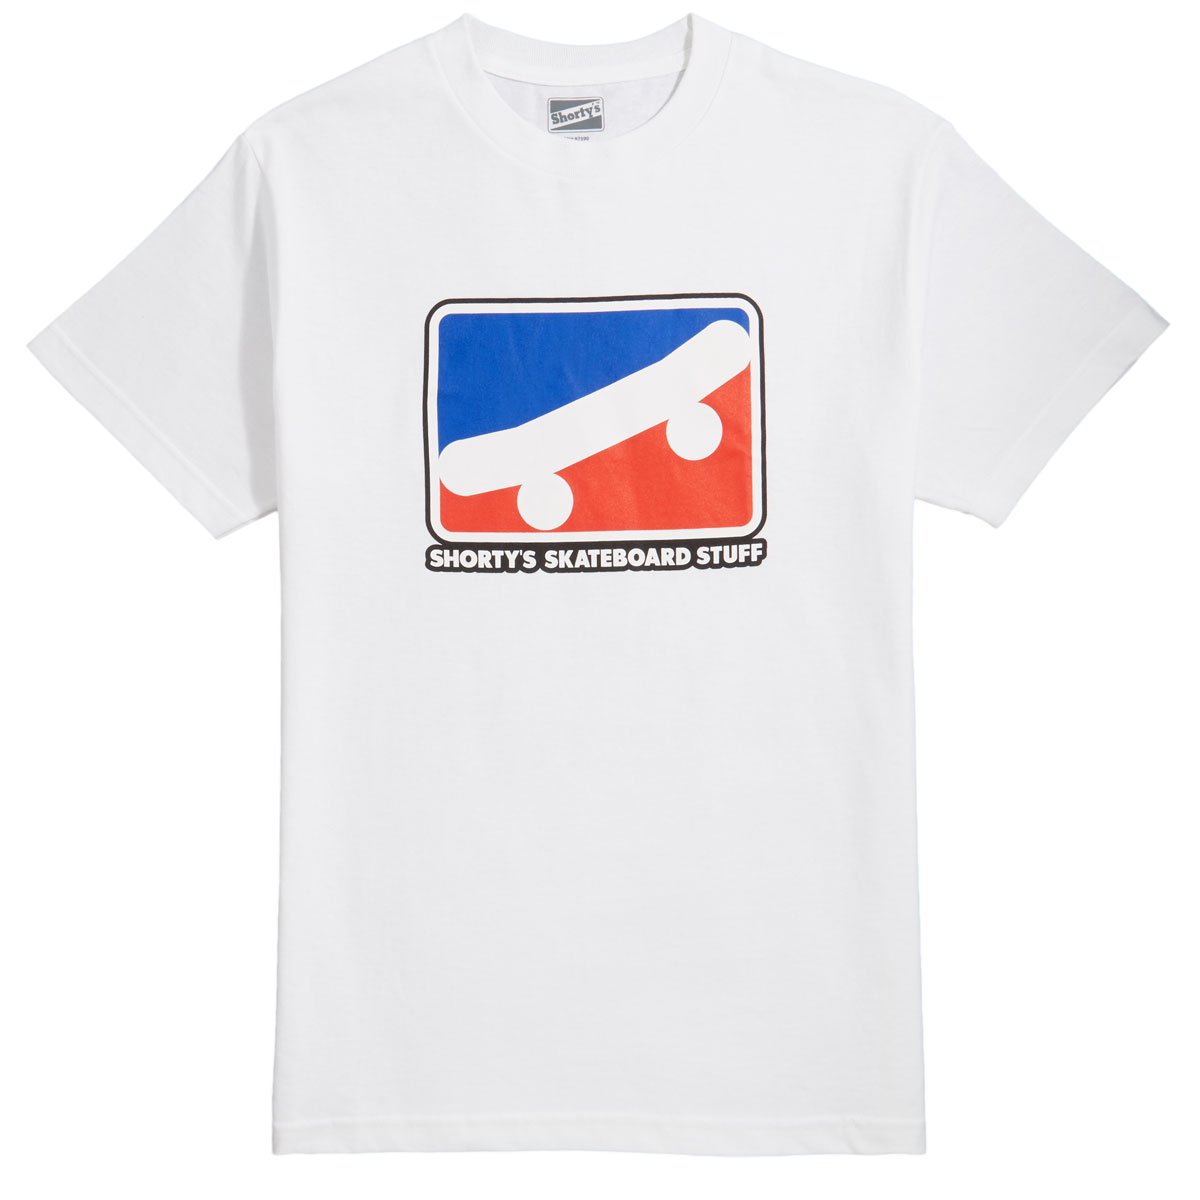 Shorty's Skate Icon T-Shirt - White image 1